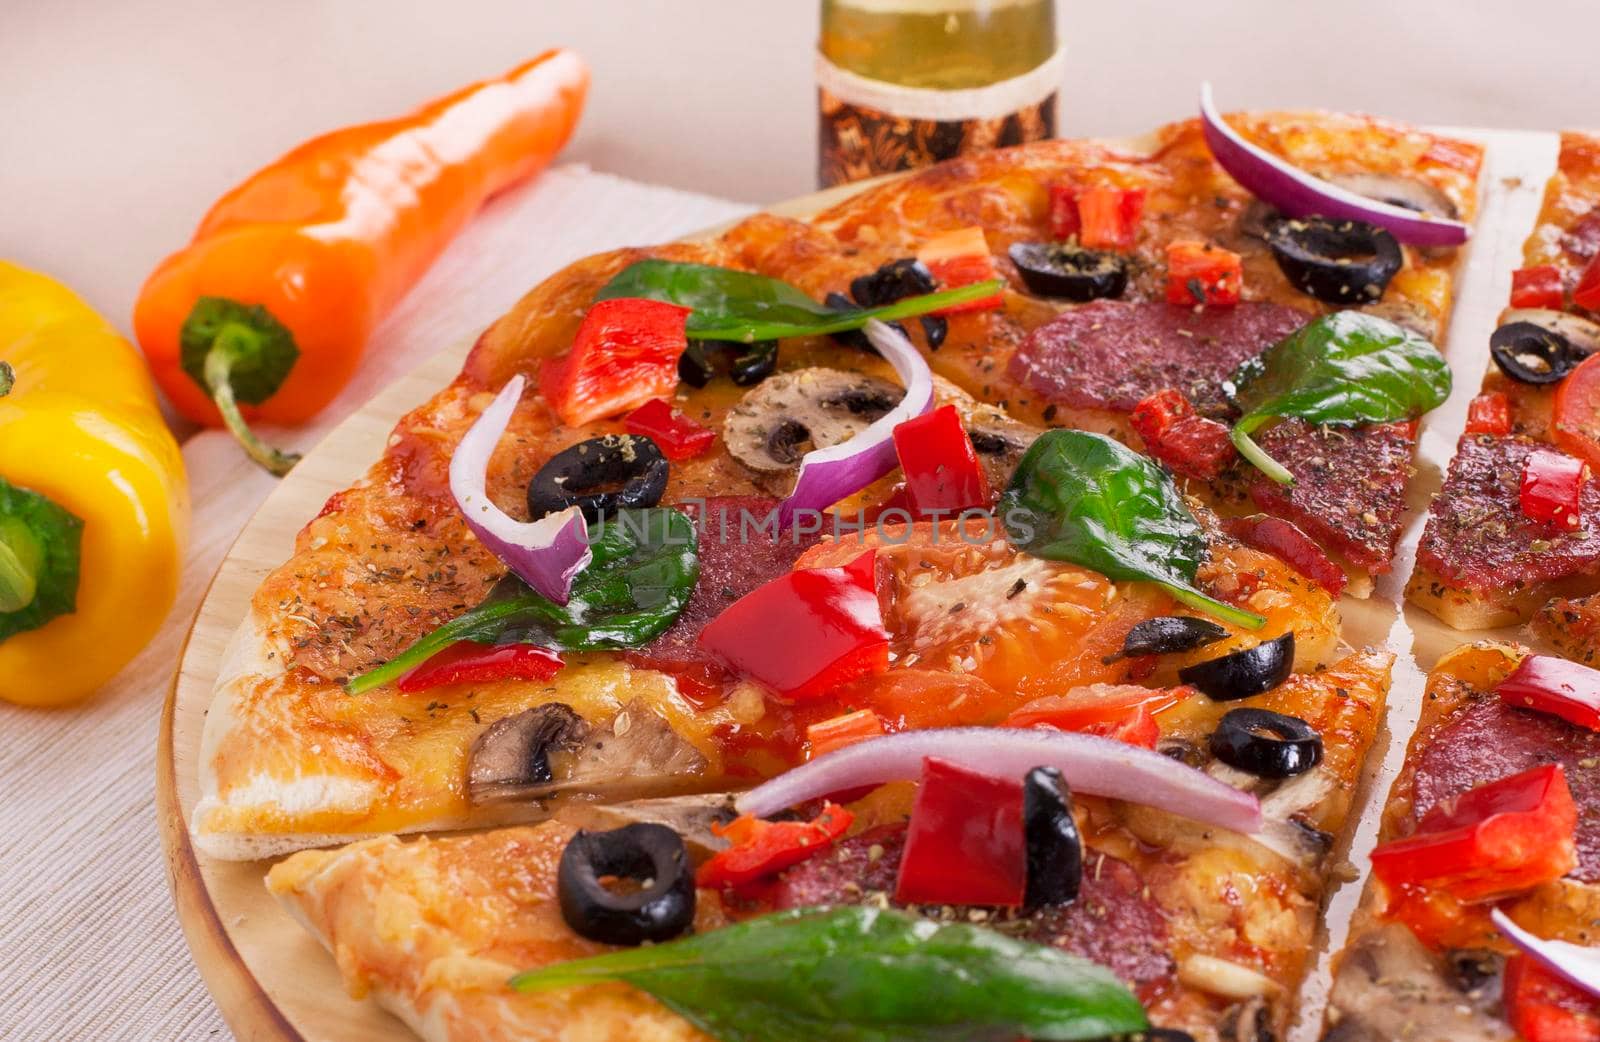 Slice of Delicious fresh Pepperoni Pizza.